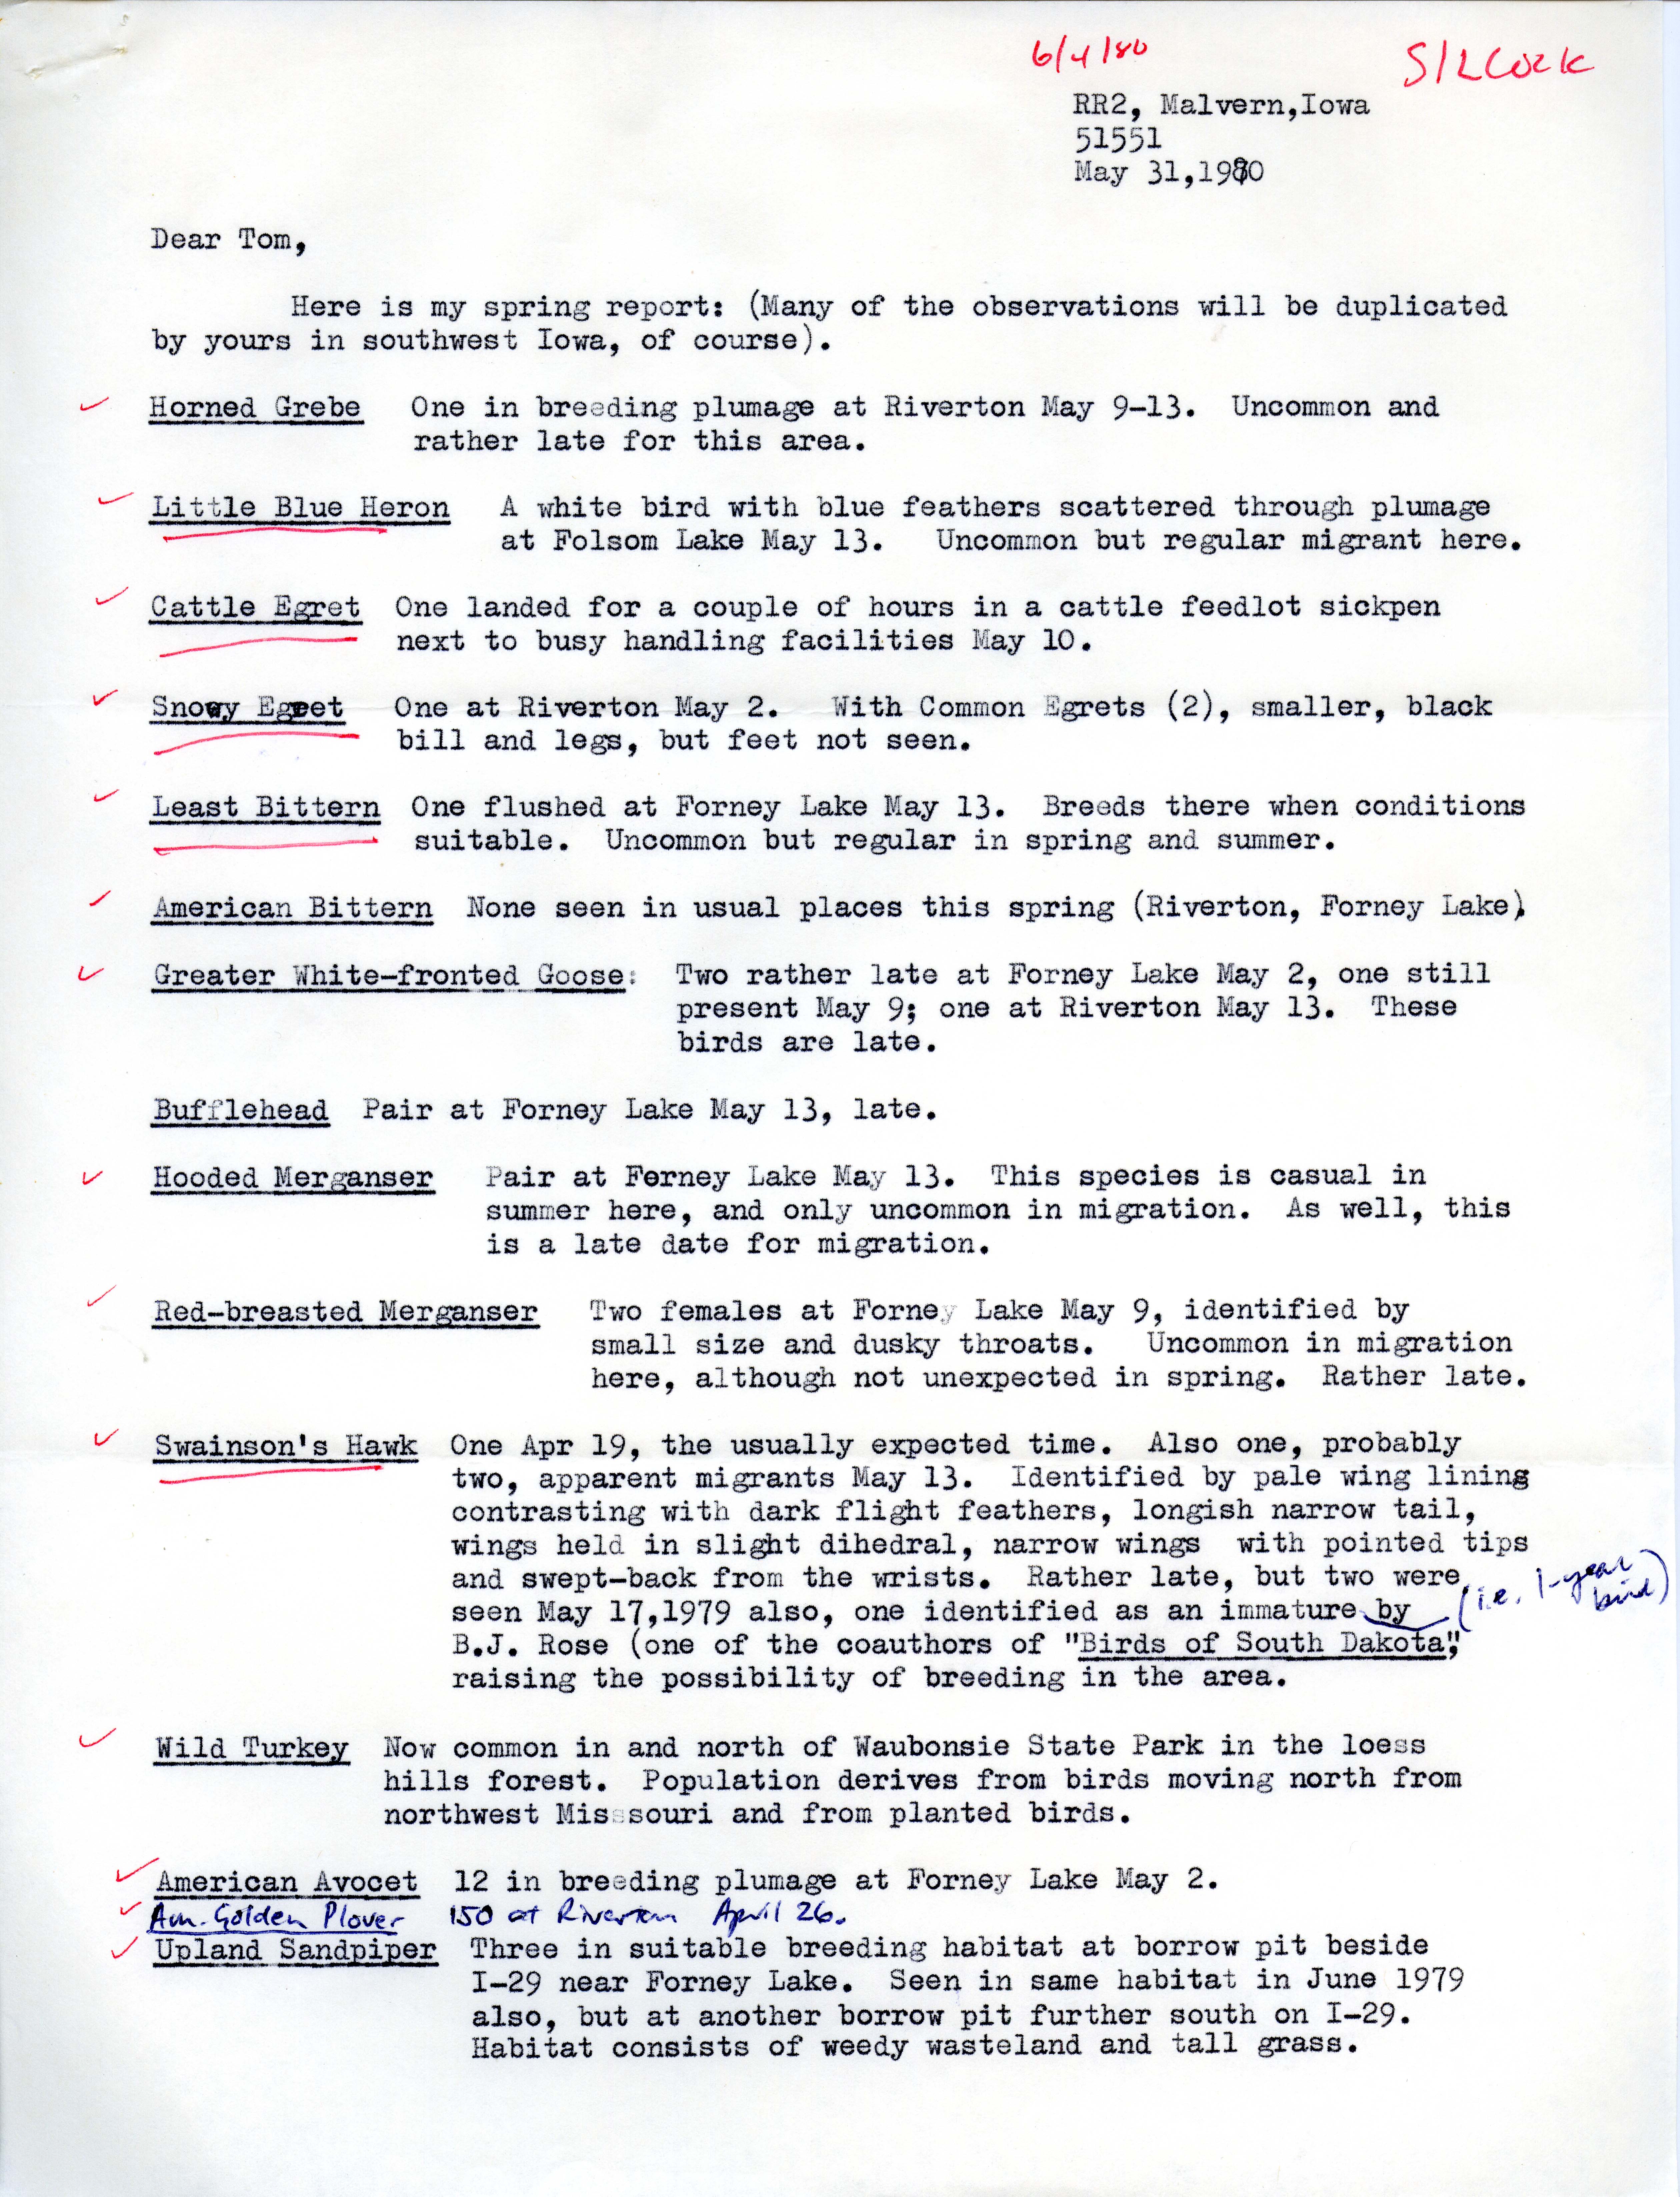 W. Ross Silcock letter to Thomas H. Kent regarding bird sightings, May 31, 1980